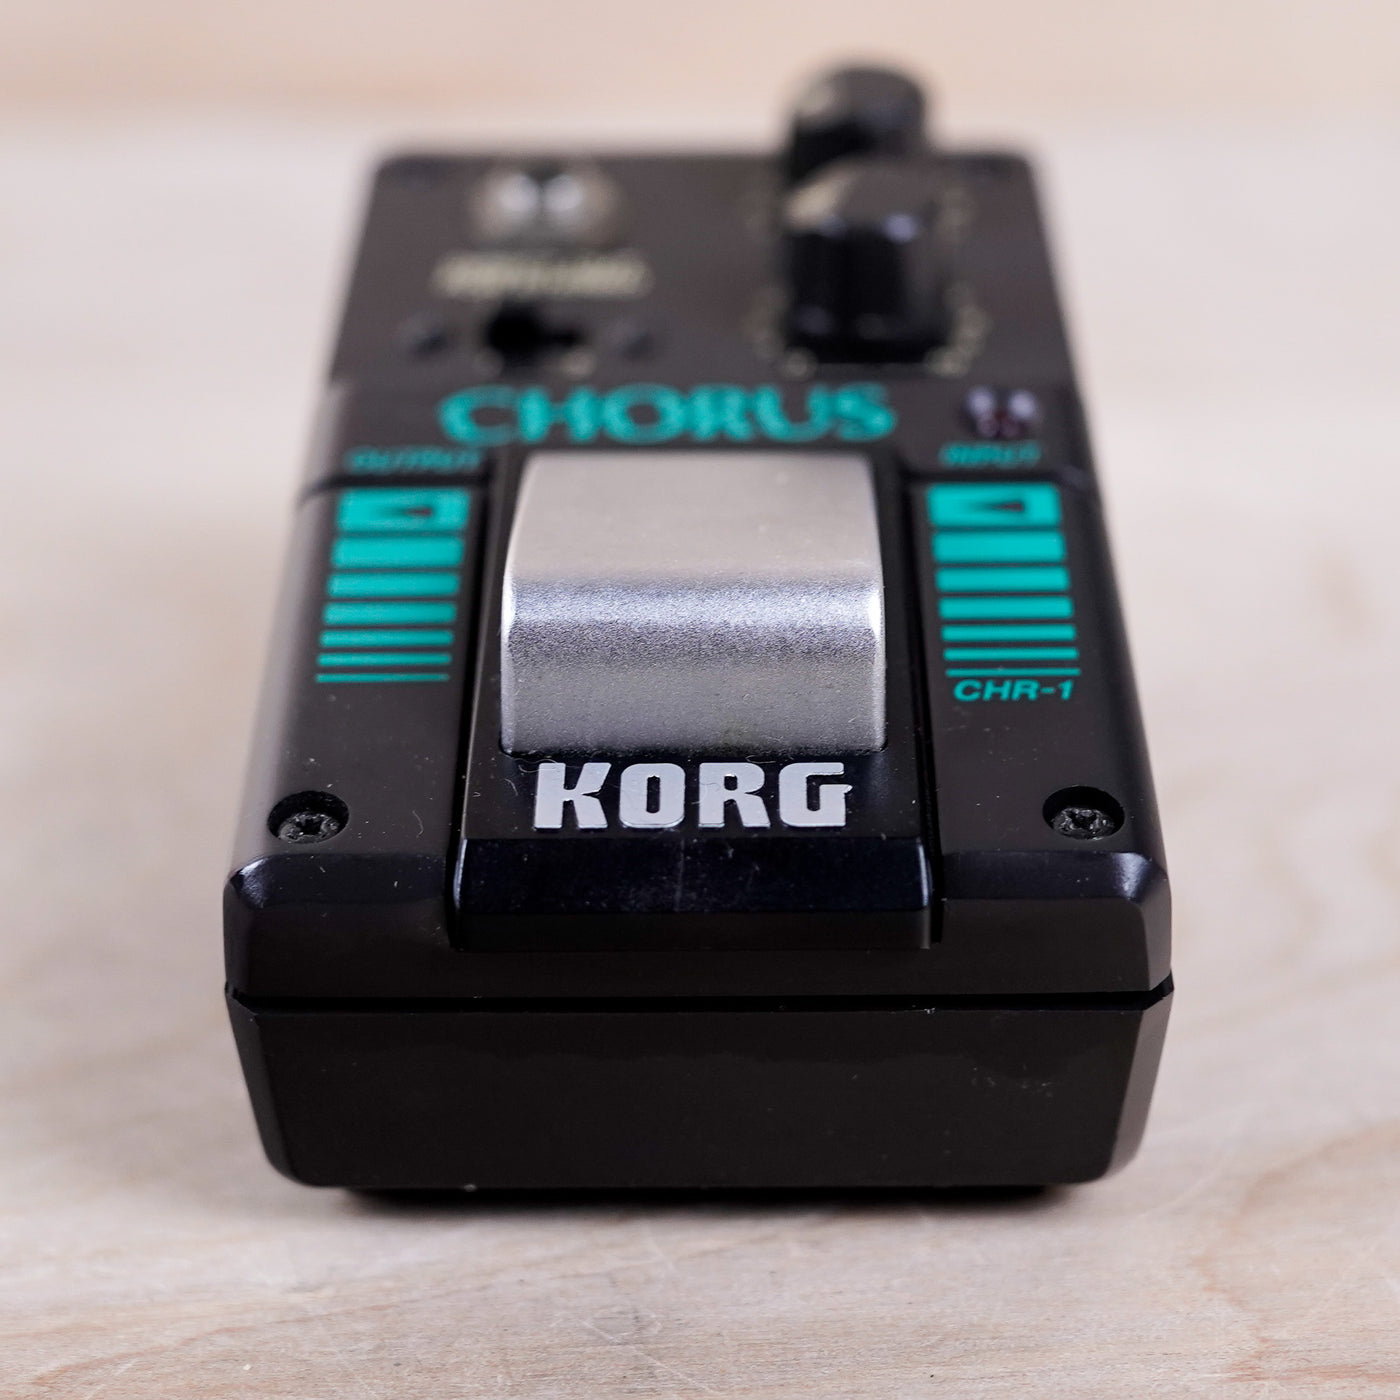 Korg CHR-1 Chorus Vintage Stereo Guitar Pedal